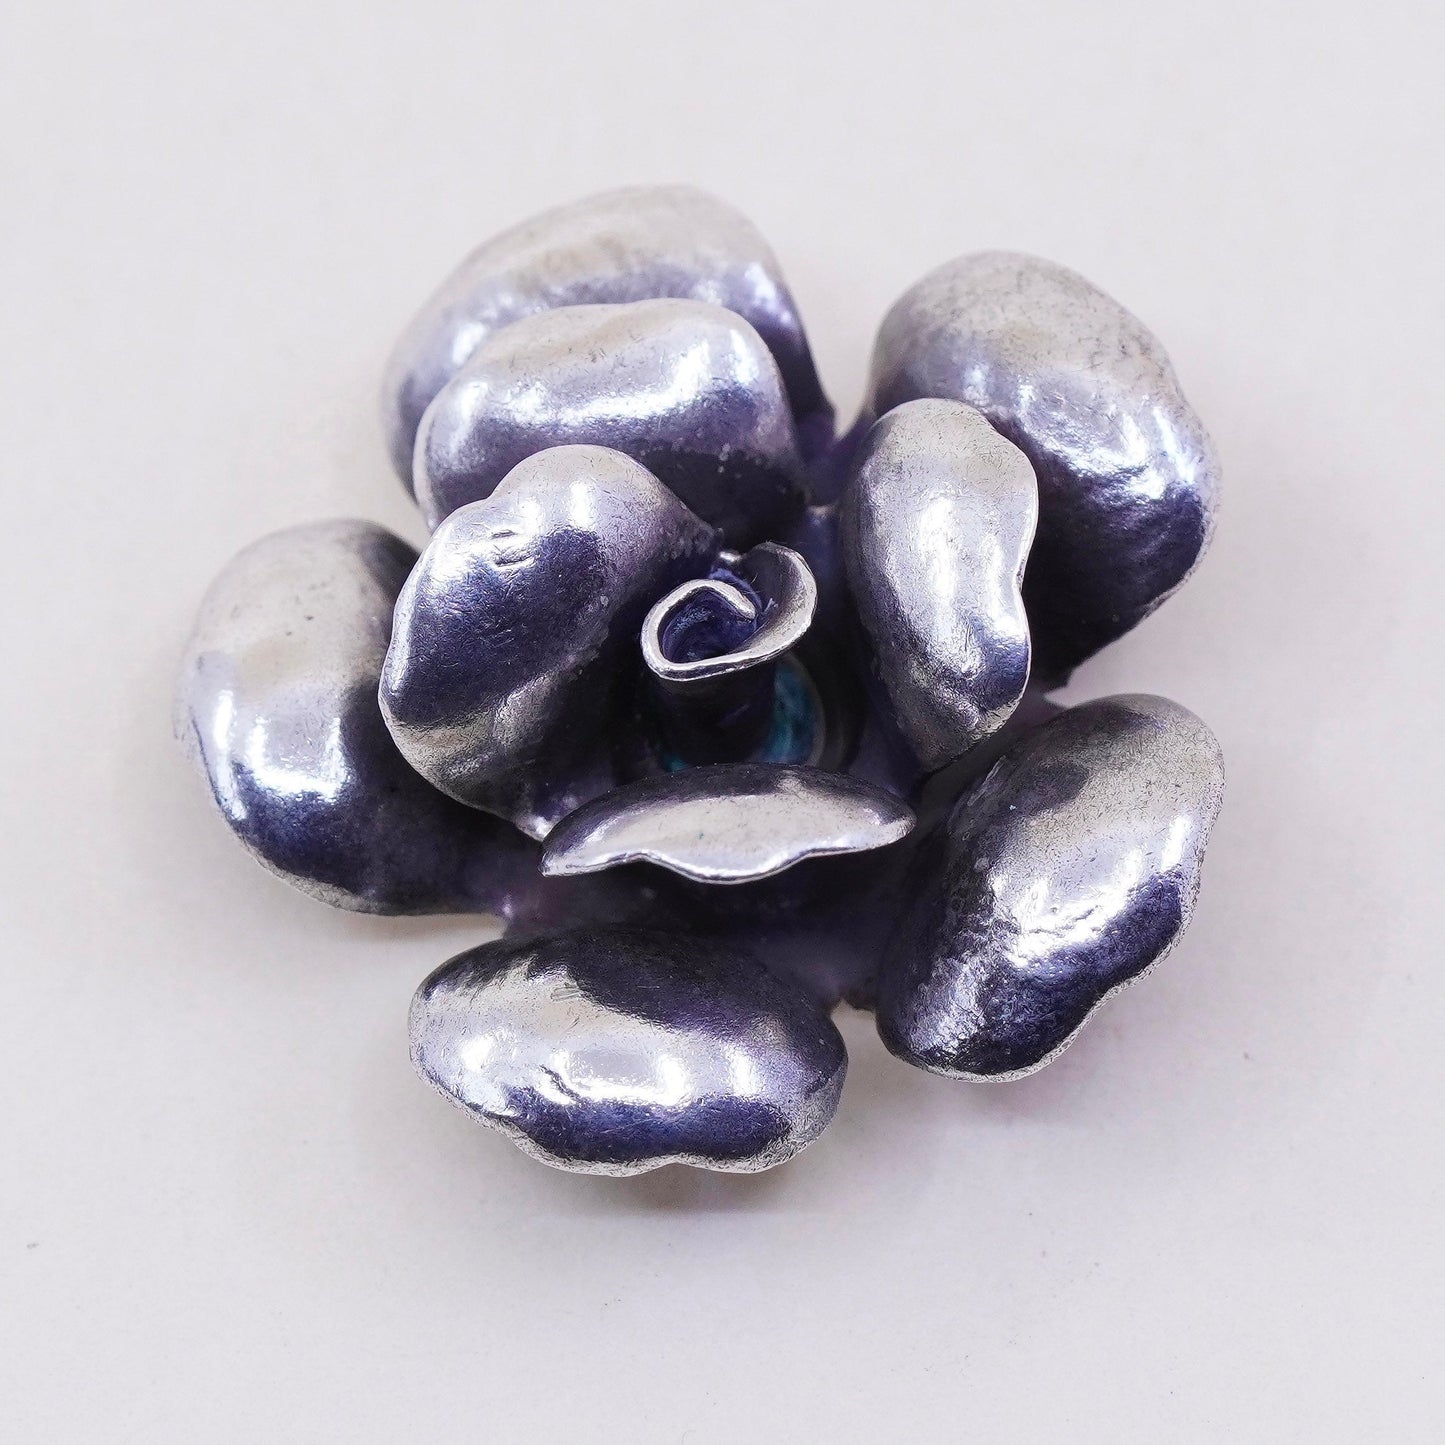 Vintage Sterling silver handmade pendant, 925 3D rose flower